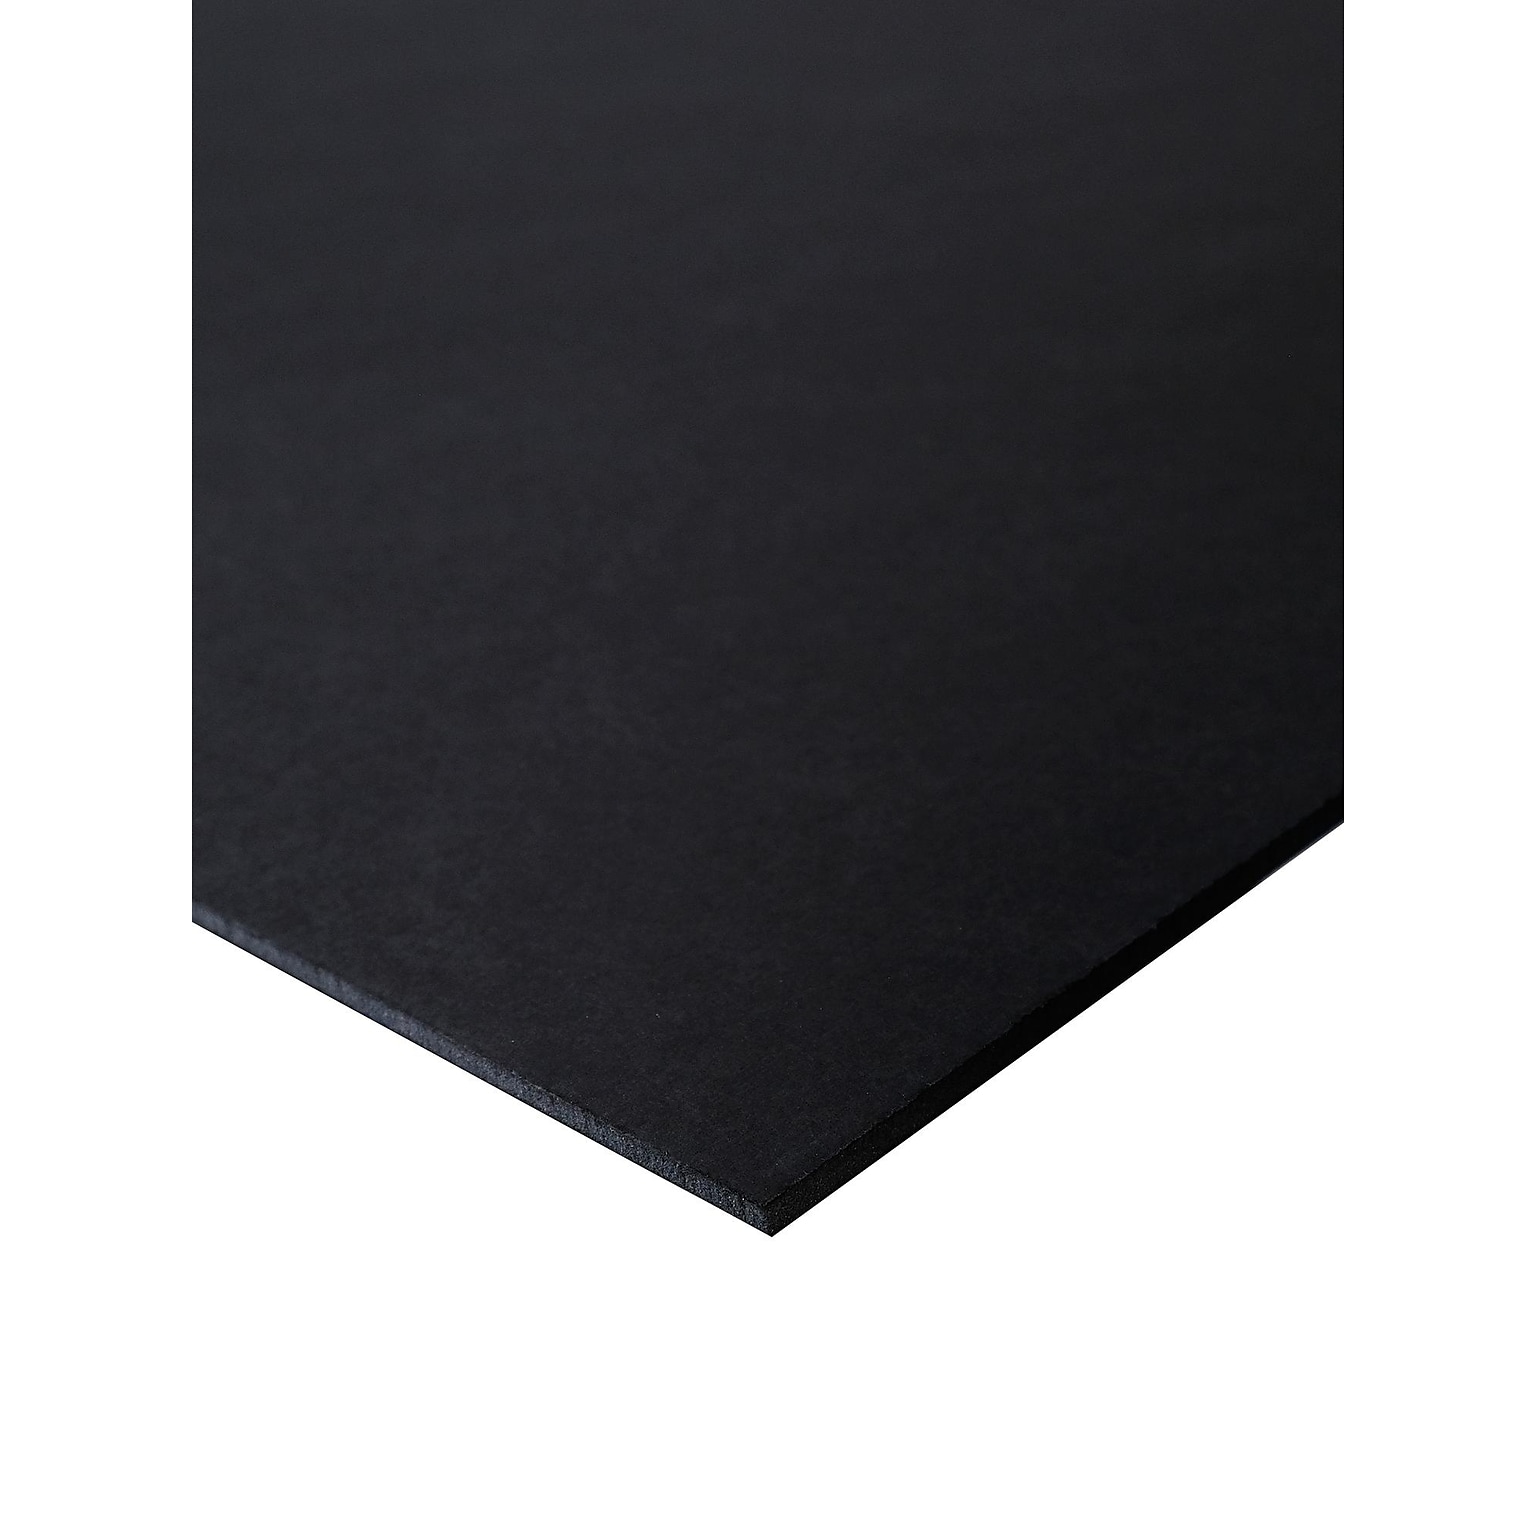 Crescent Fome-Cor Board, 3/16 x 20 x 30, All-black, Pack of 25 (PK25-11188-2030C)